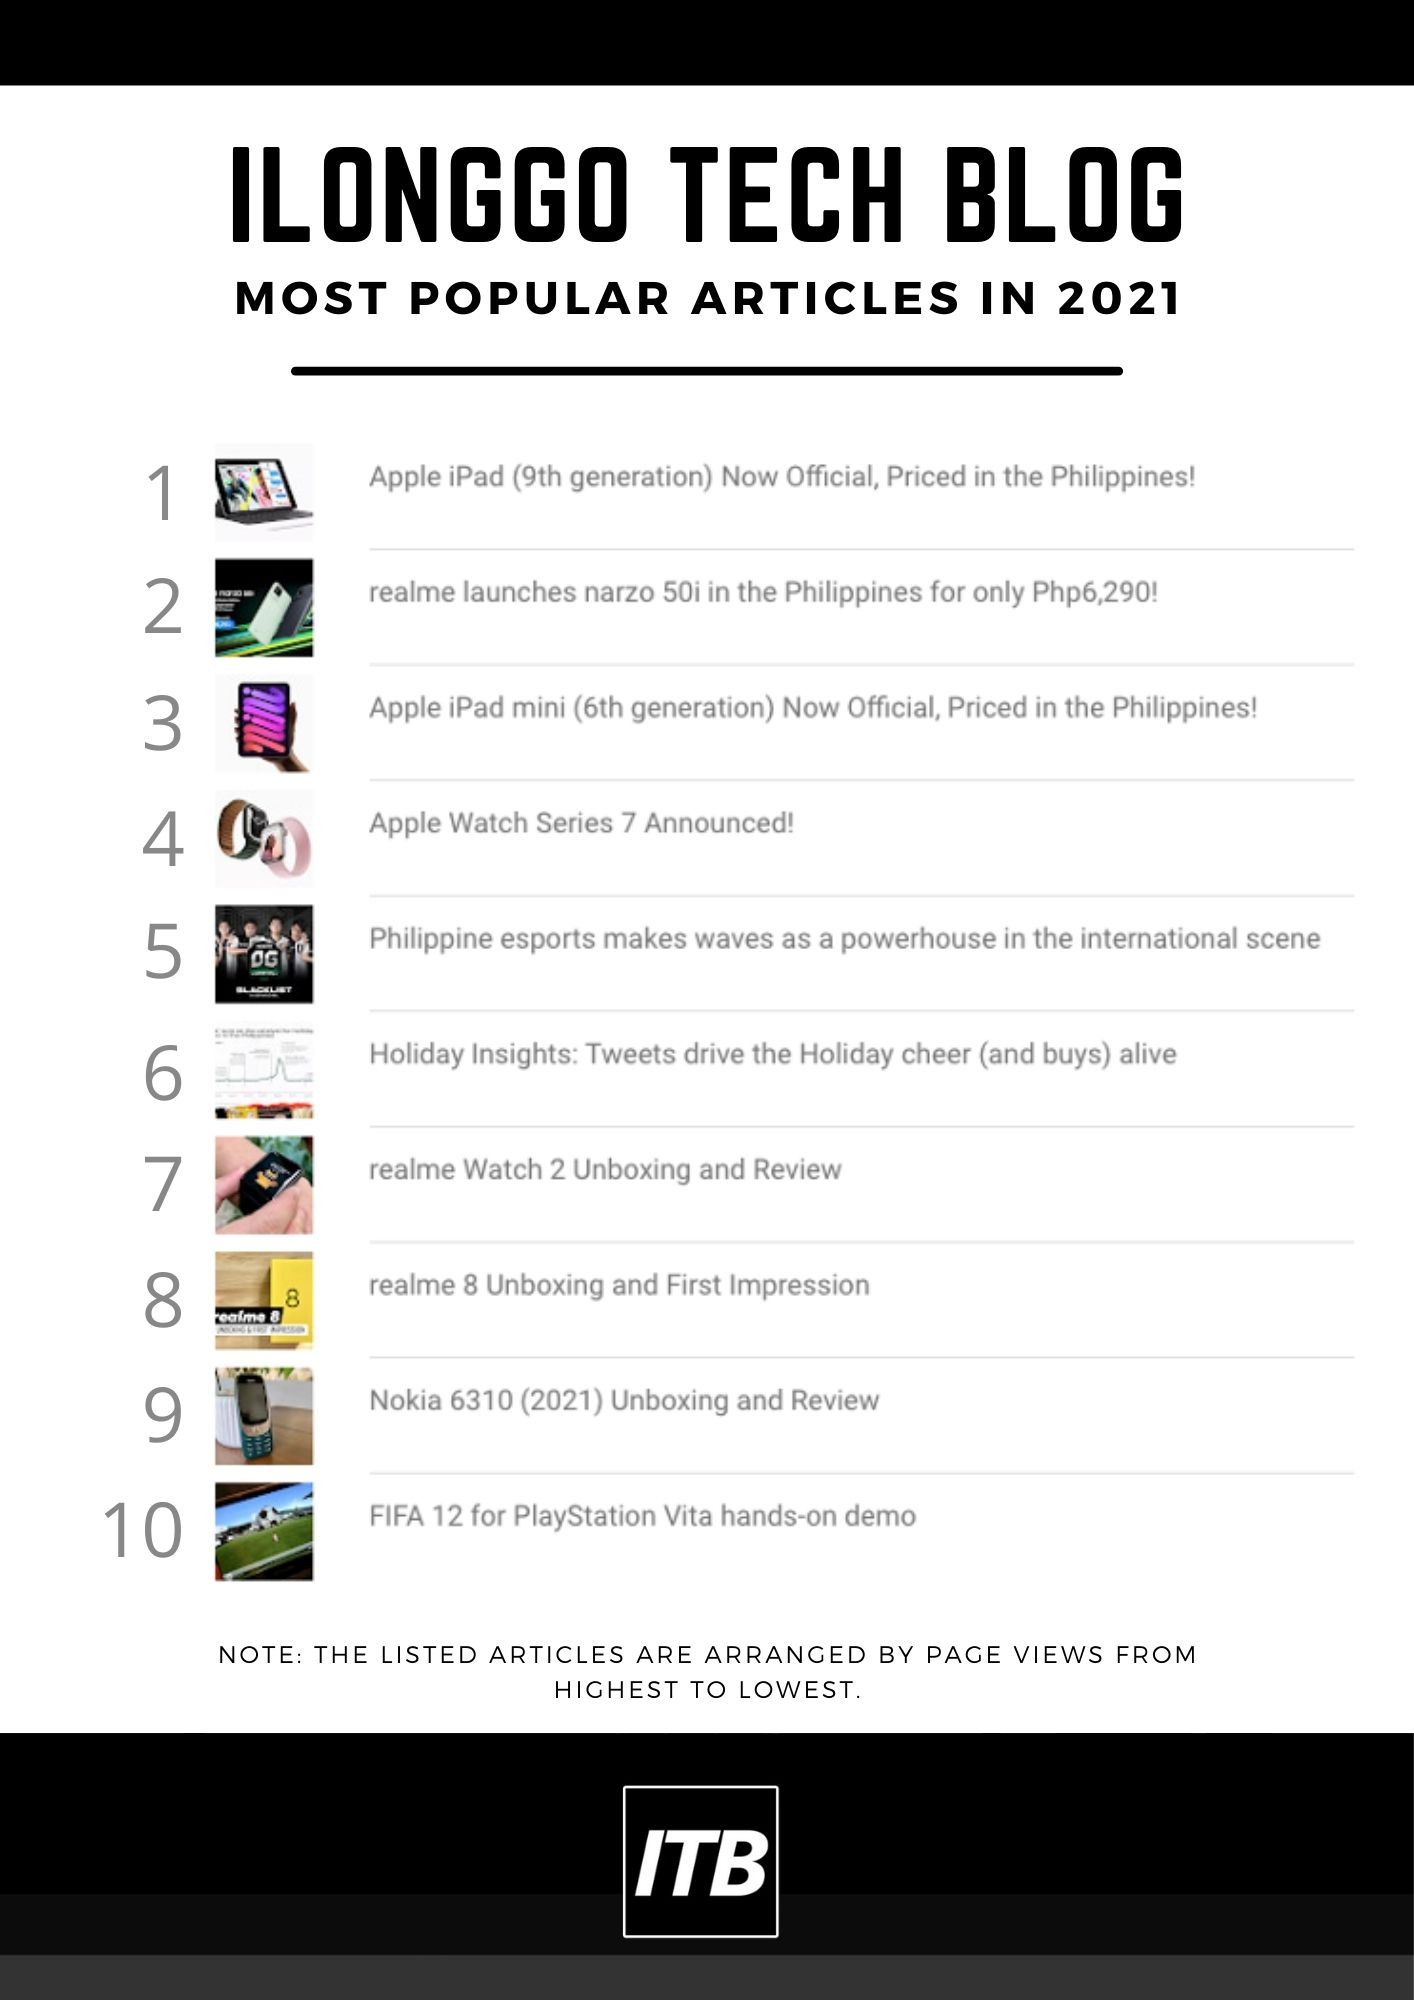 Ilonggo Tech Blog's Most Popular Articles in 2021